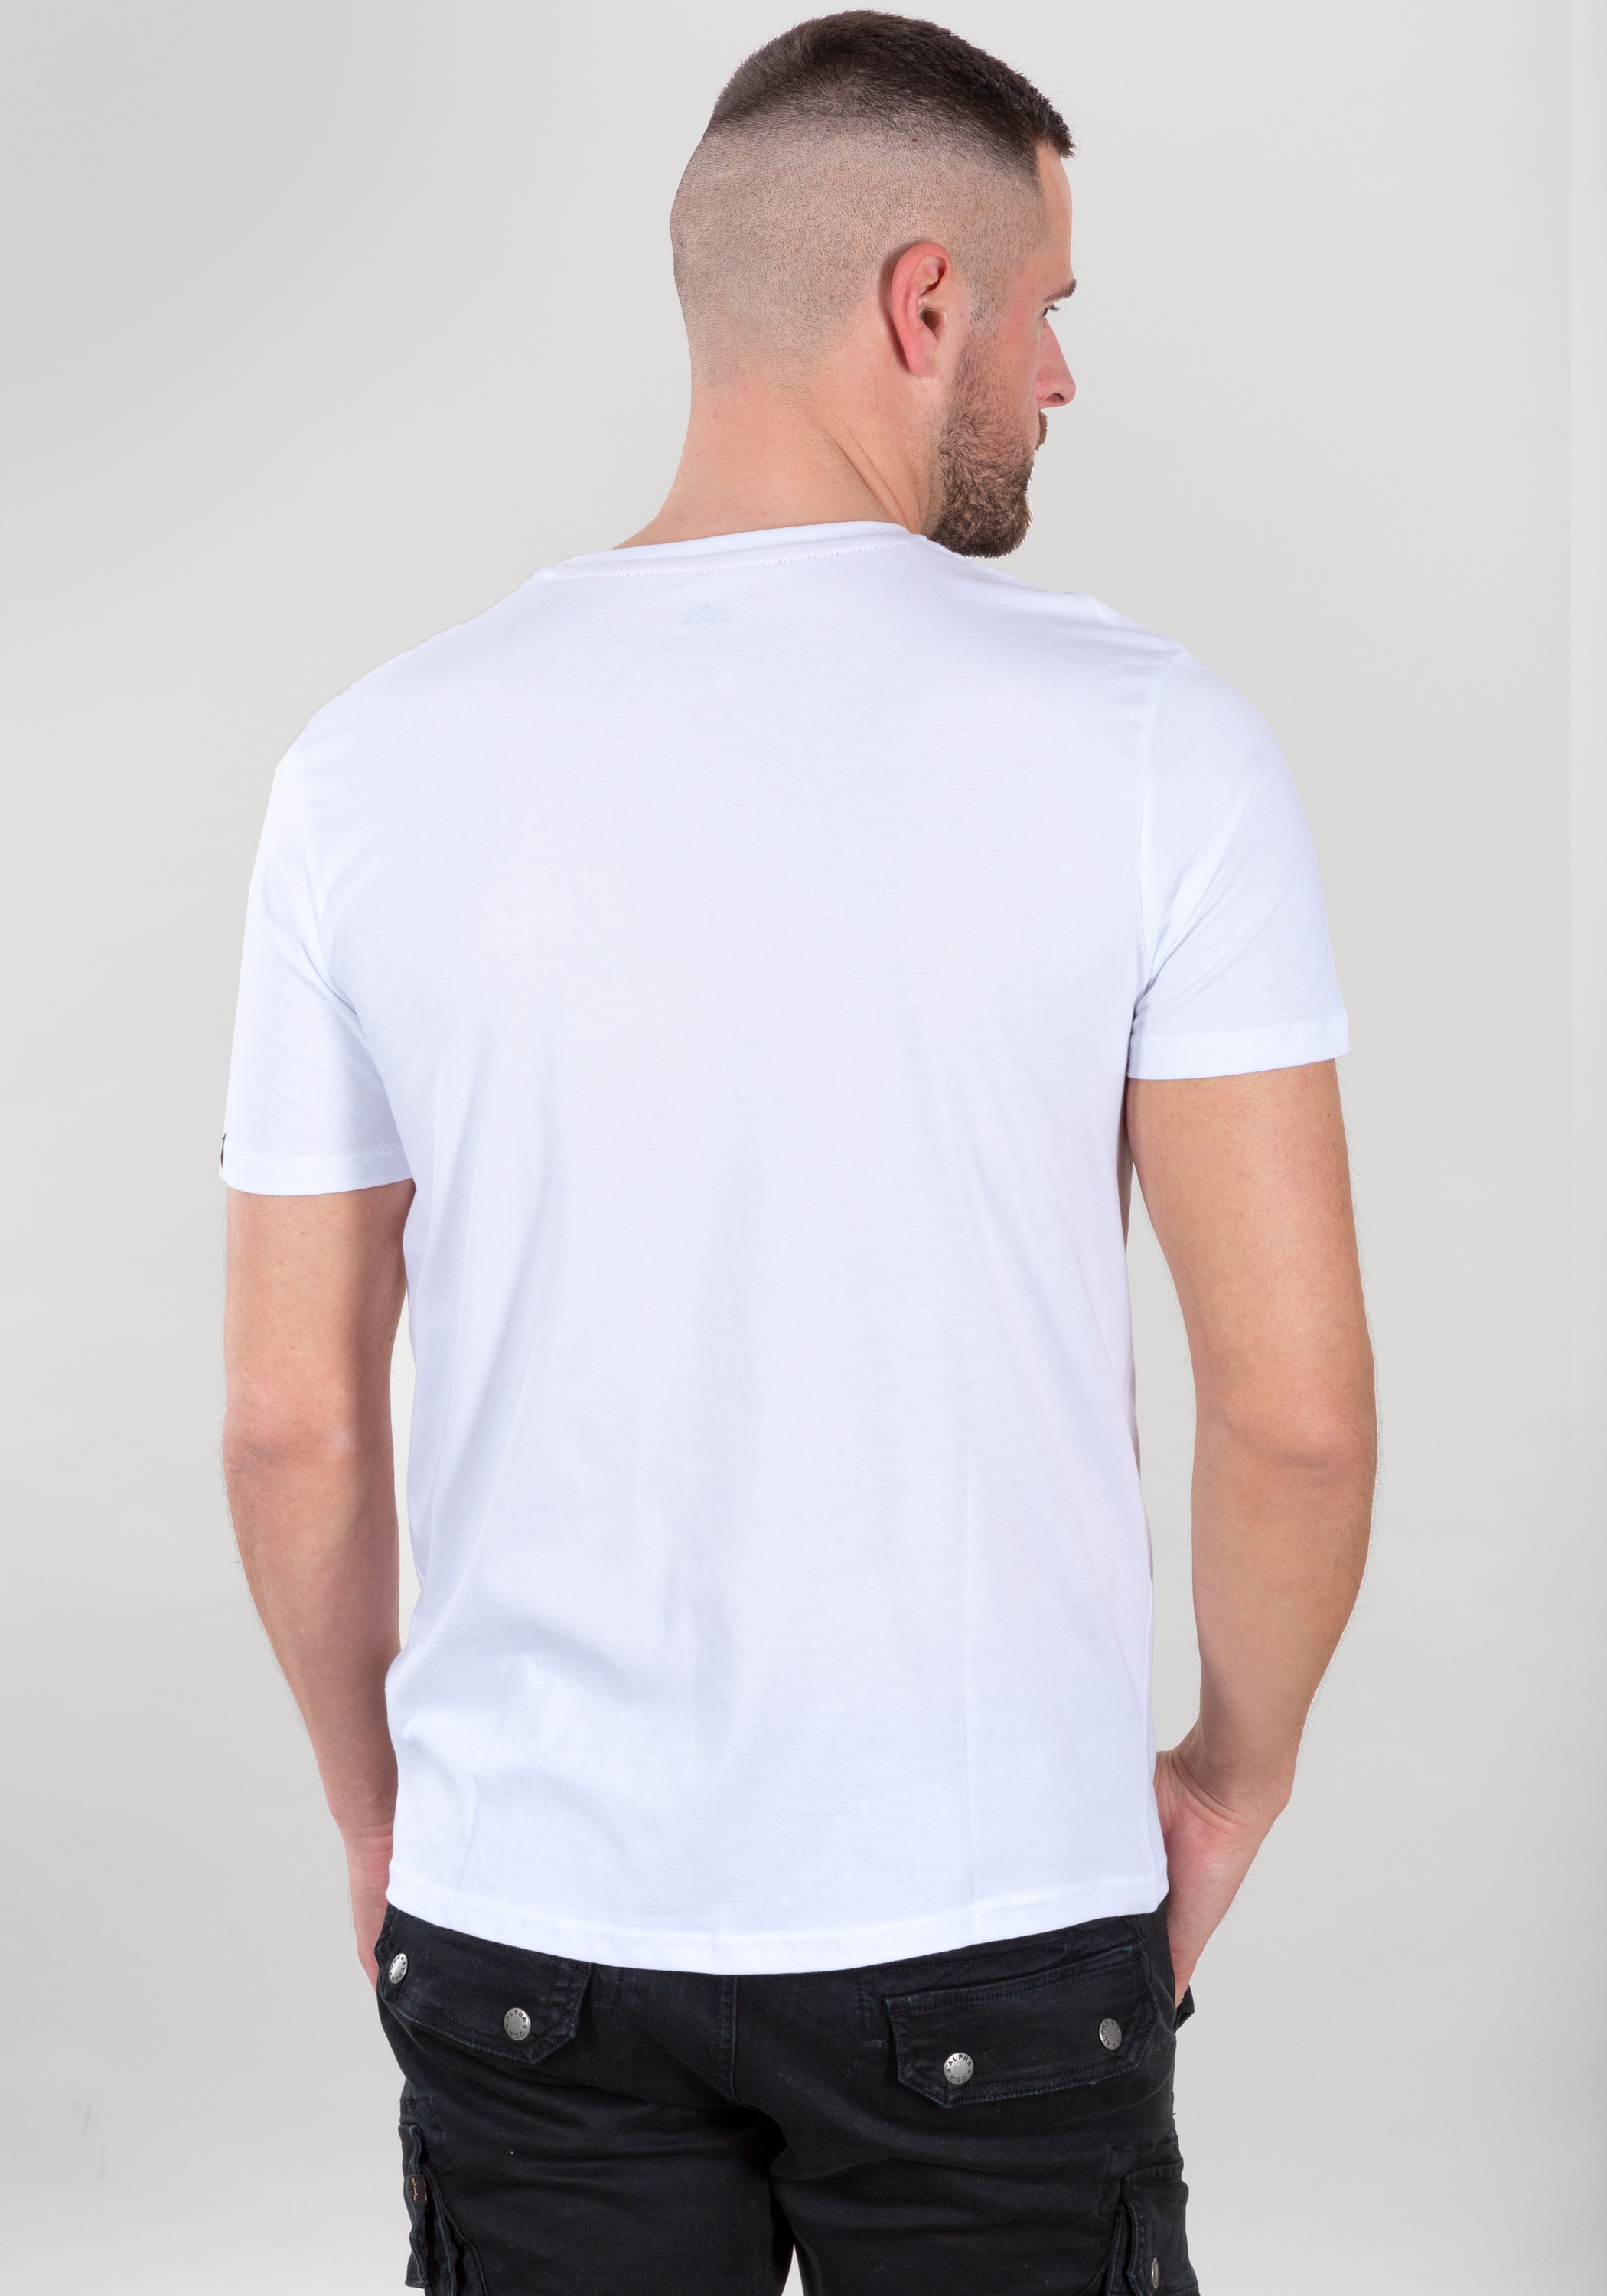 OTTO Industries Alpha kaufen »Alpha Men - T-Shirt Inlay Alpha Industries T-Shirts T« online bei